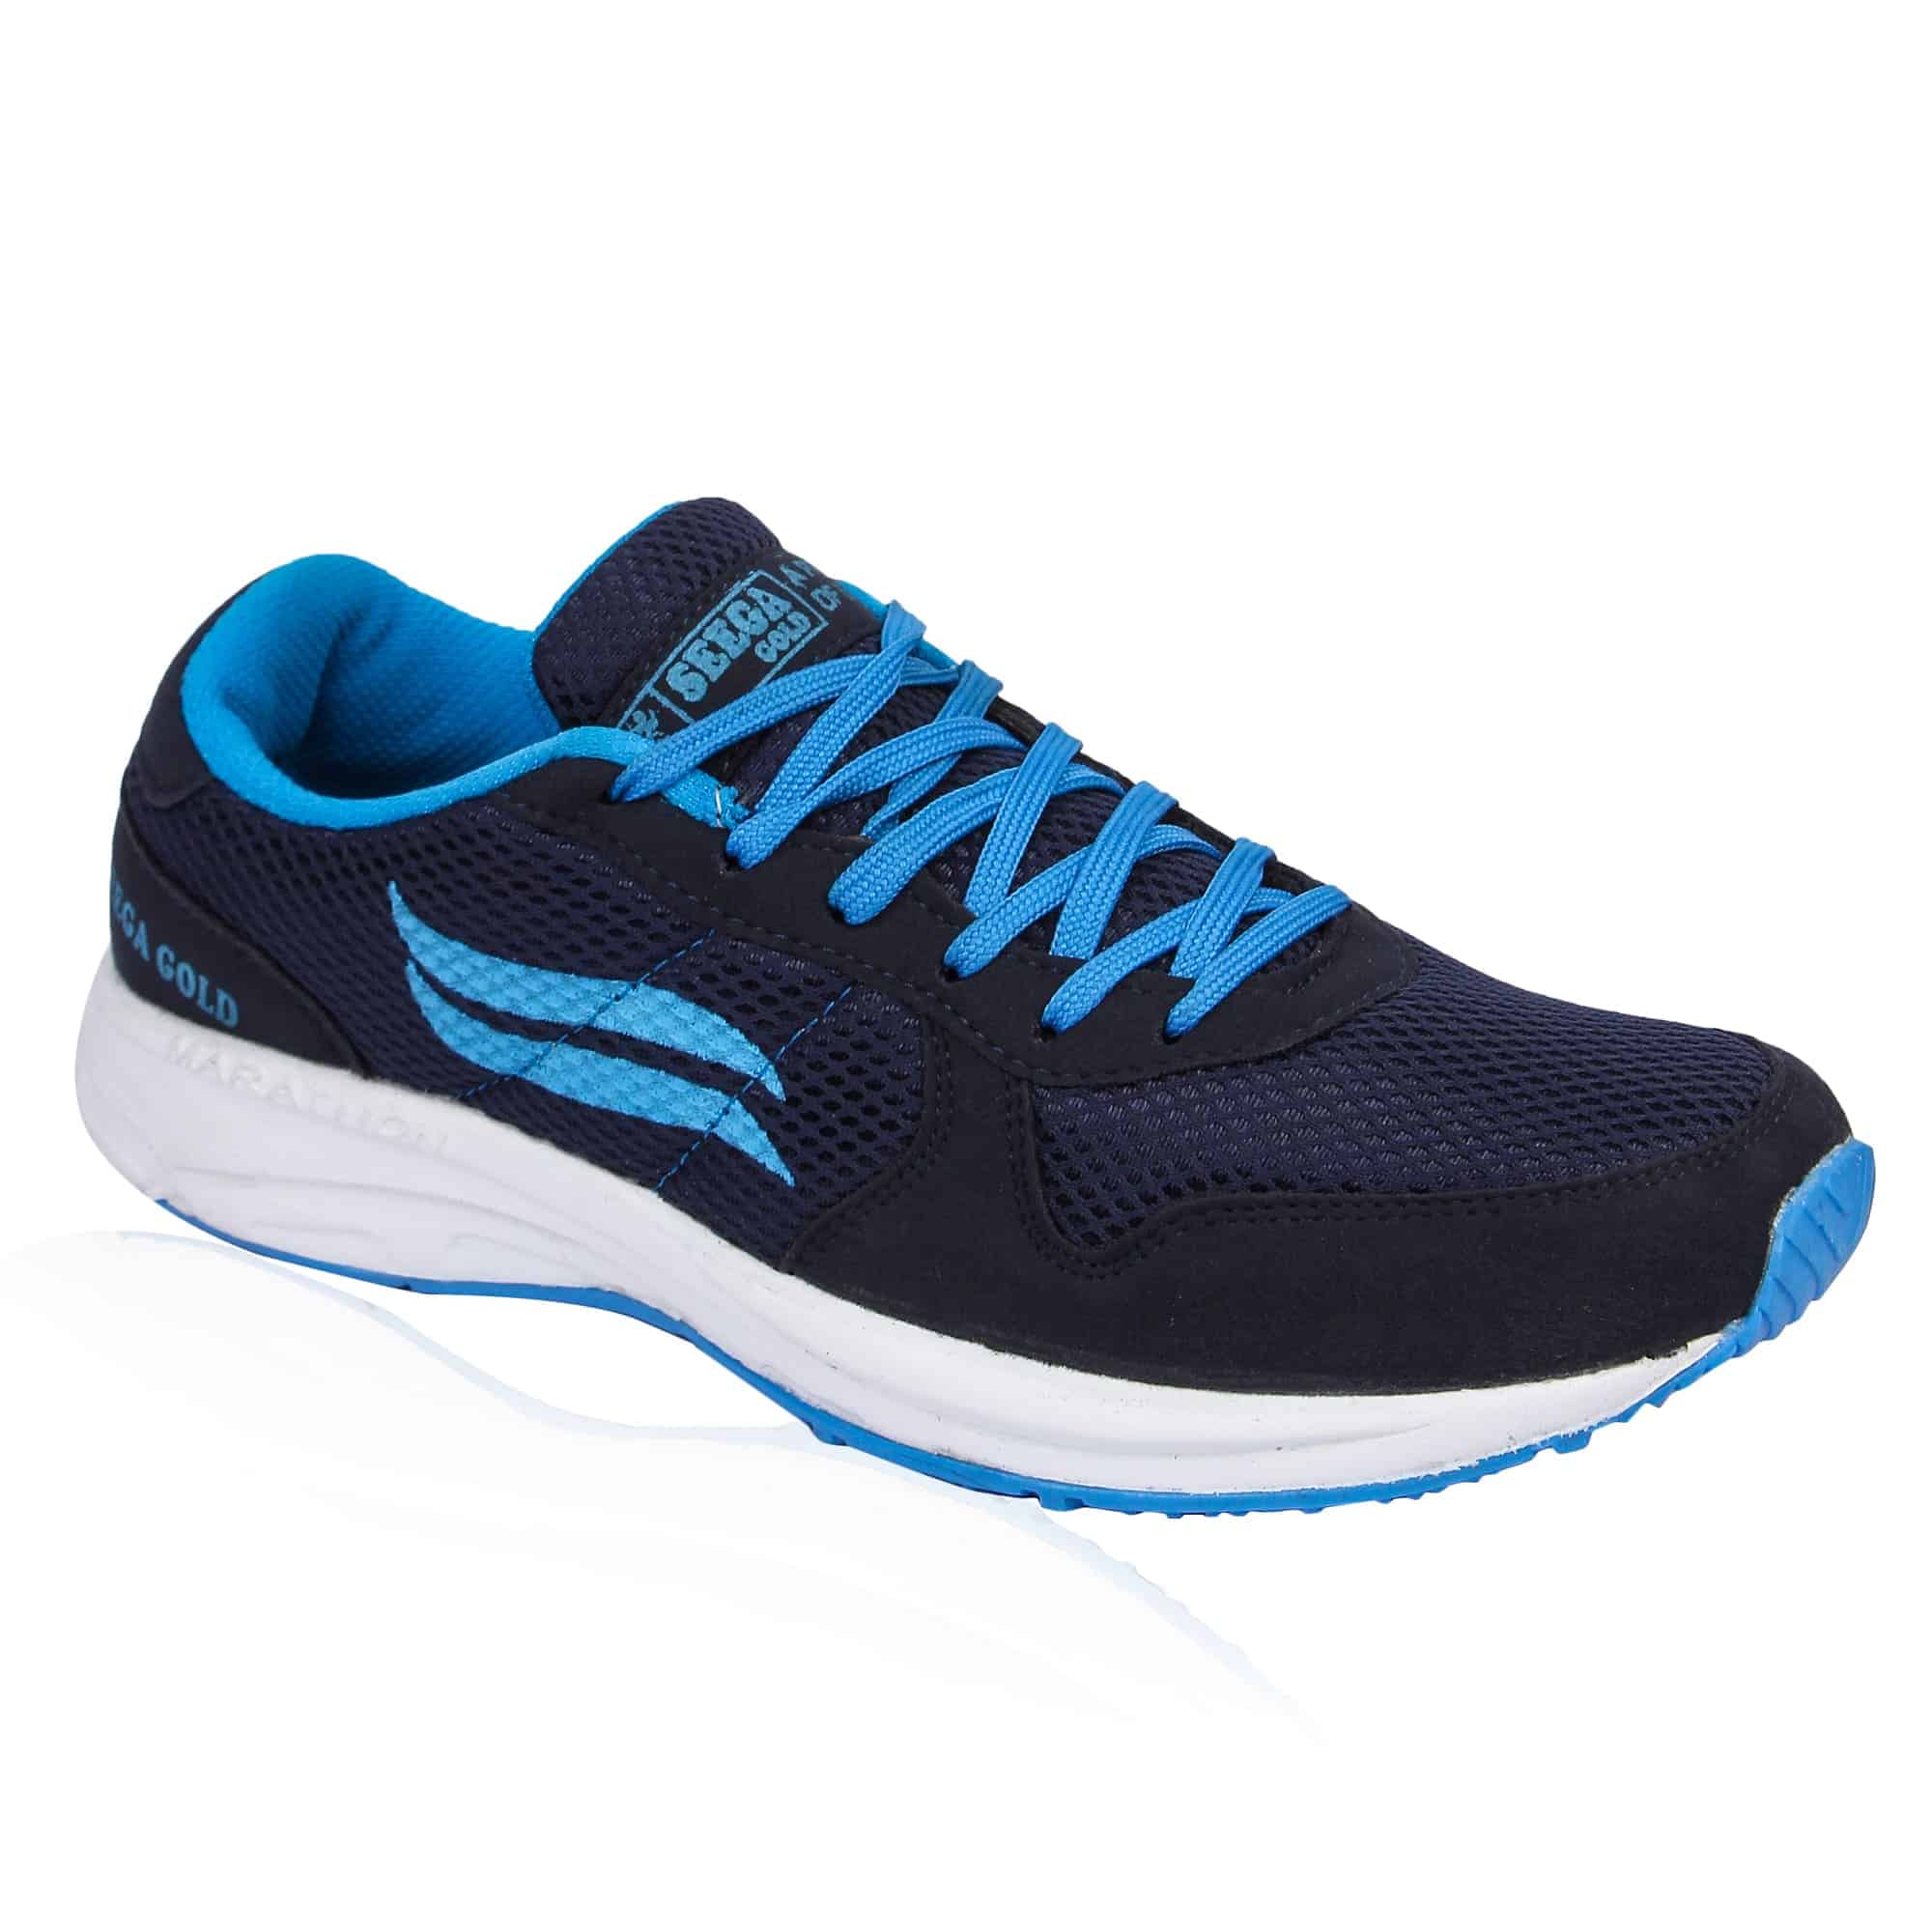 Seega Gold Marathon 01 N. Blue Men sports shoe